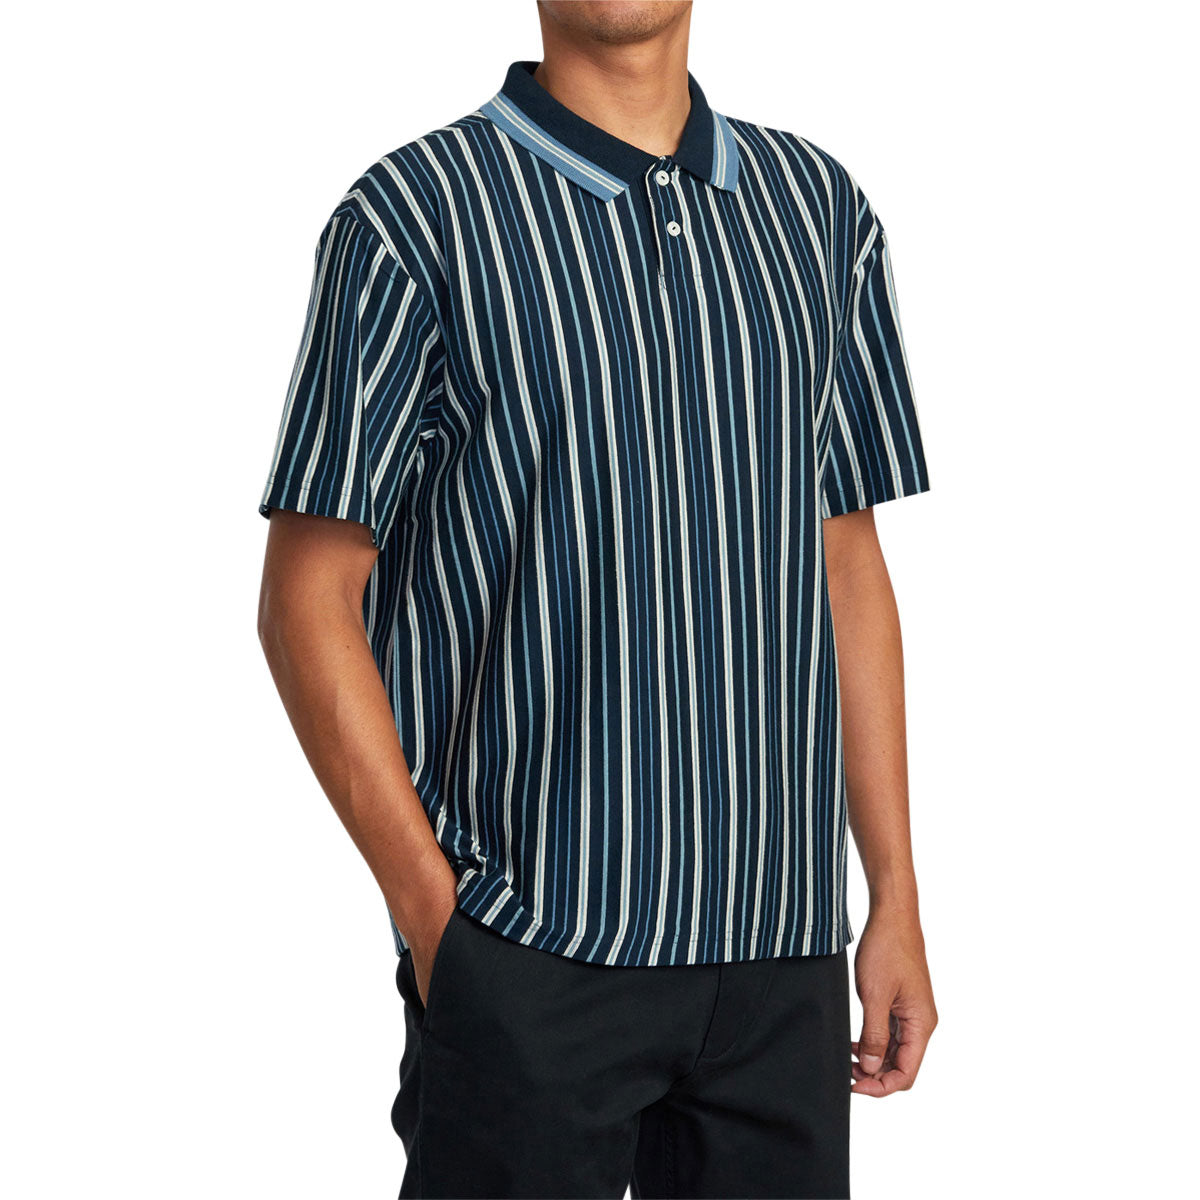 RVCA Uptown Stripe Polo Shirt - Moody Blue image 3